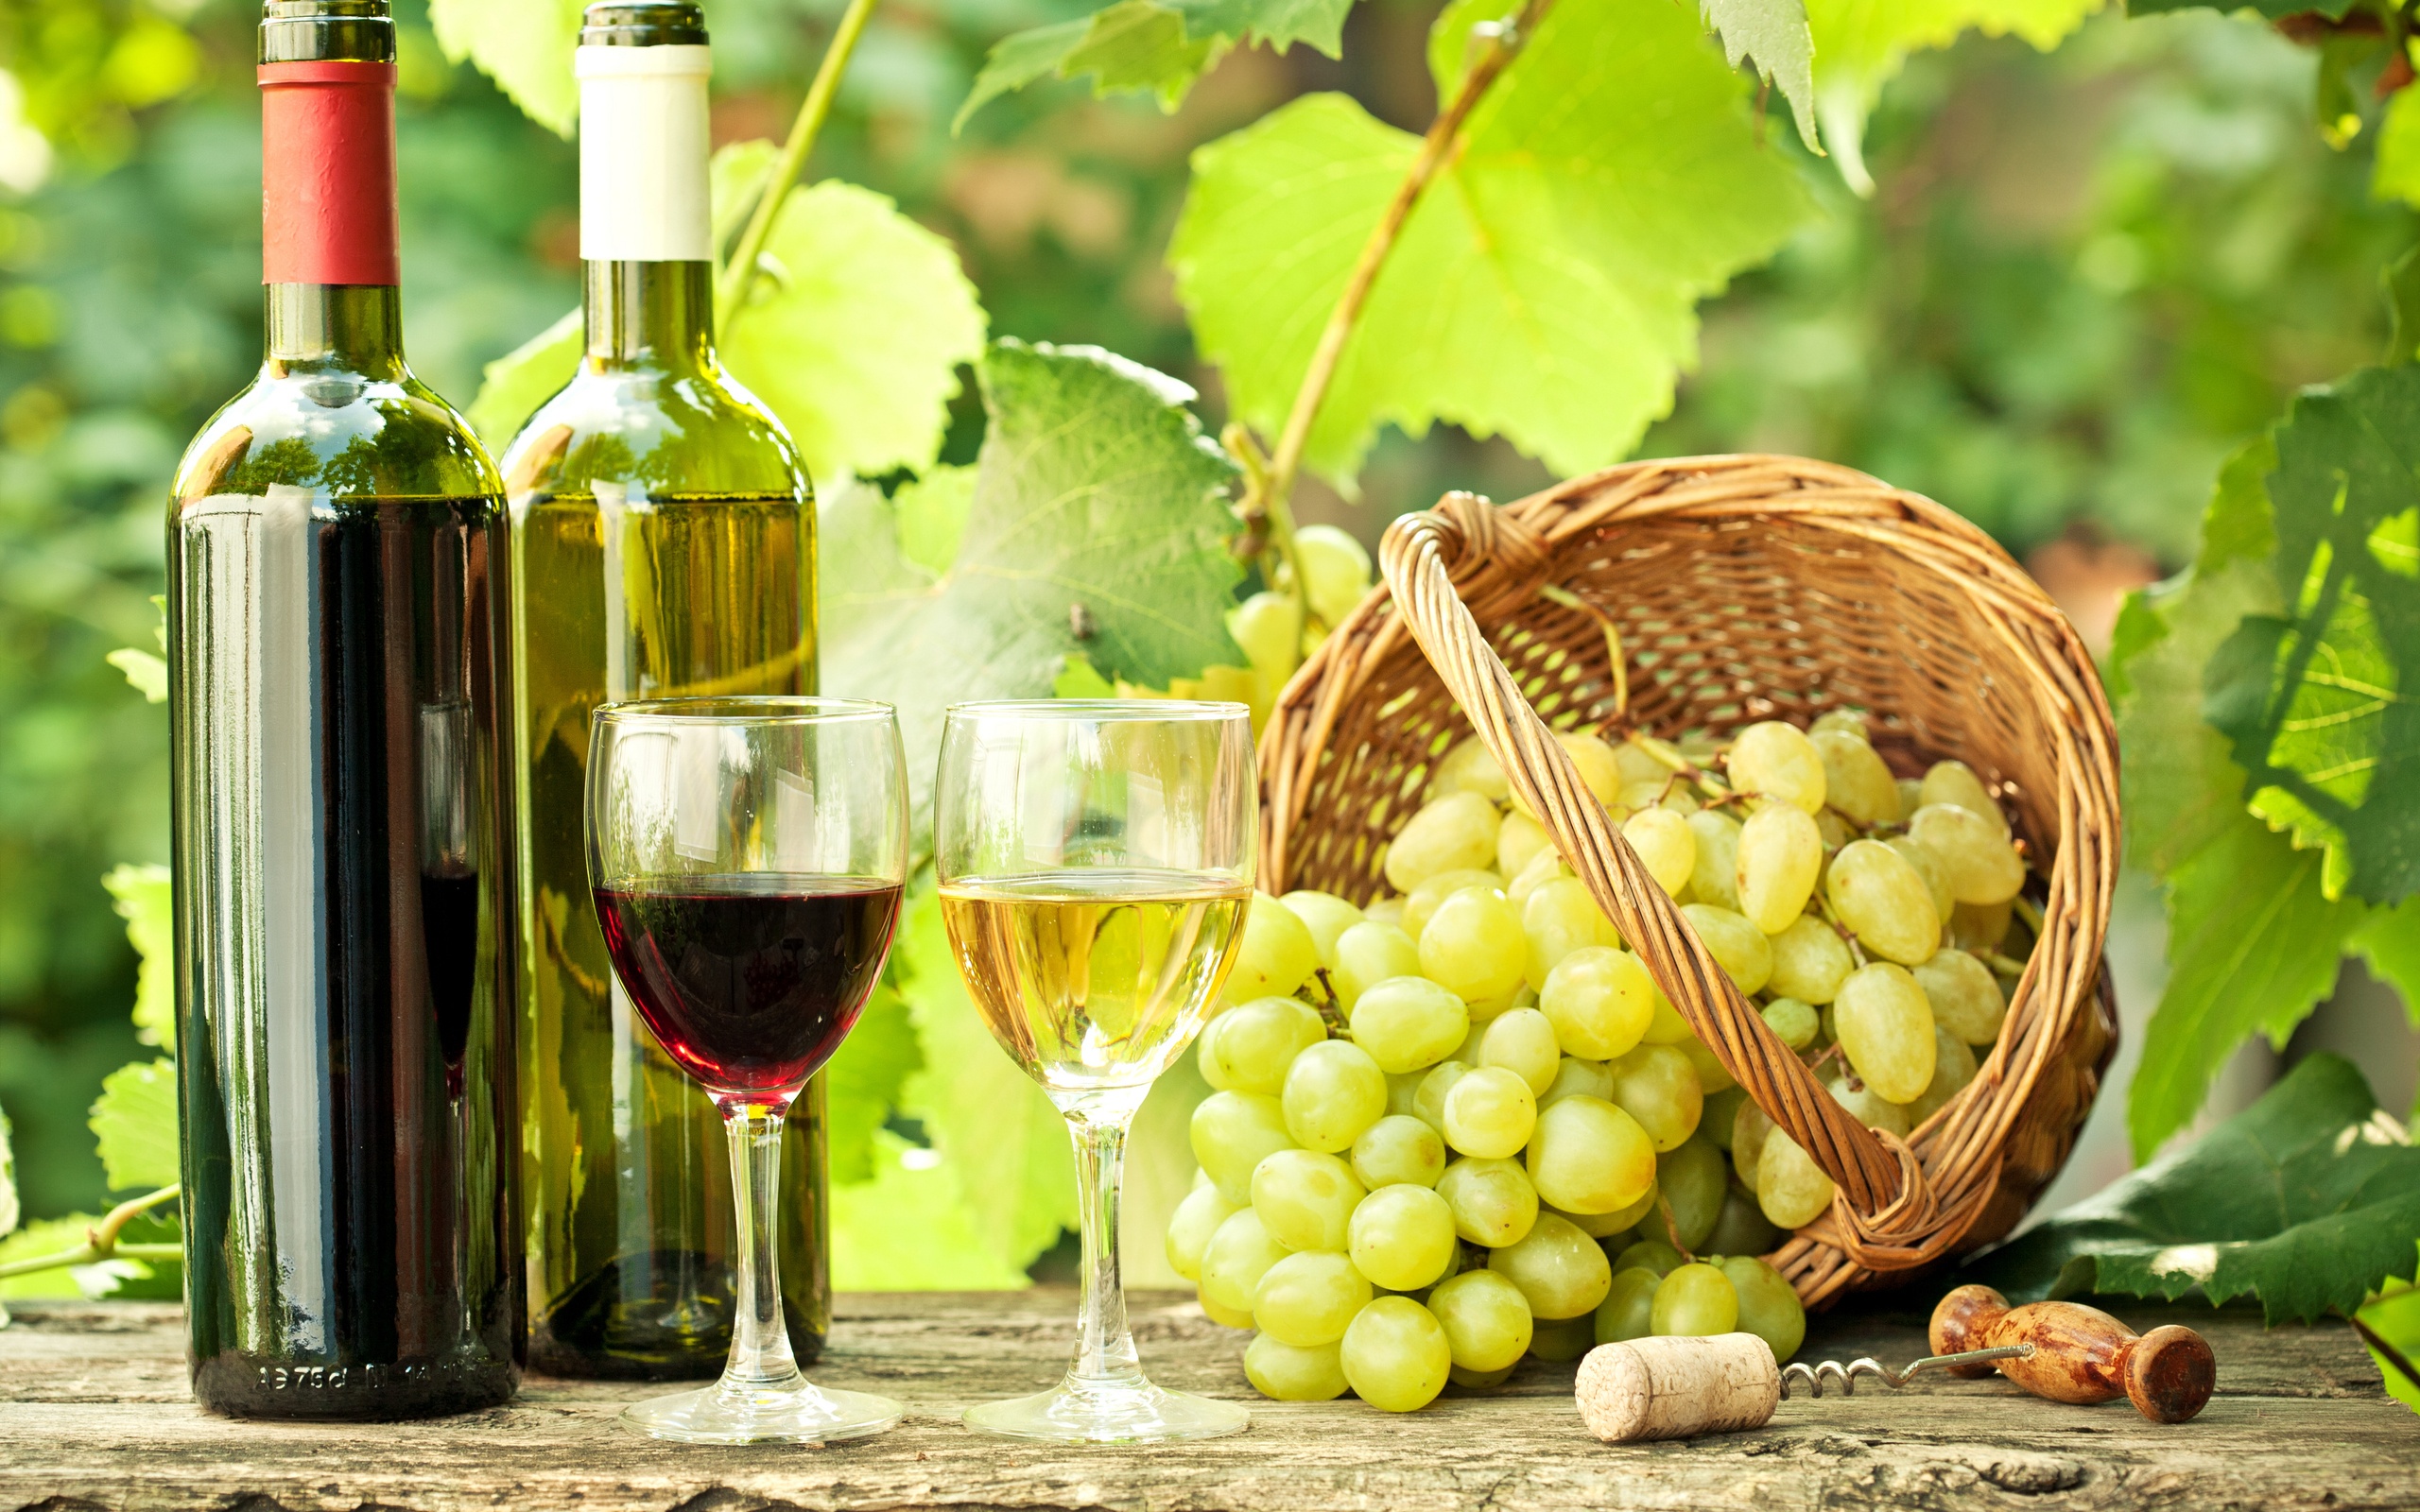 Grapes Basket And Wine Bottles Wallpaper